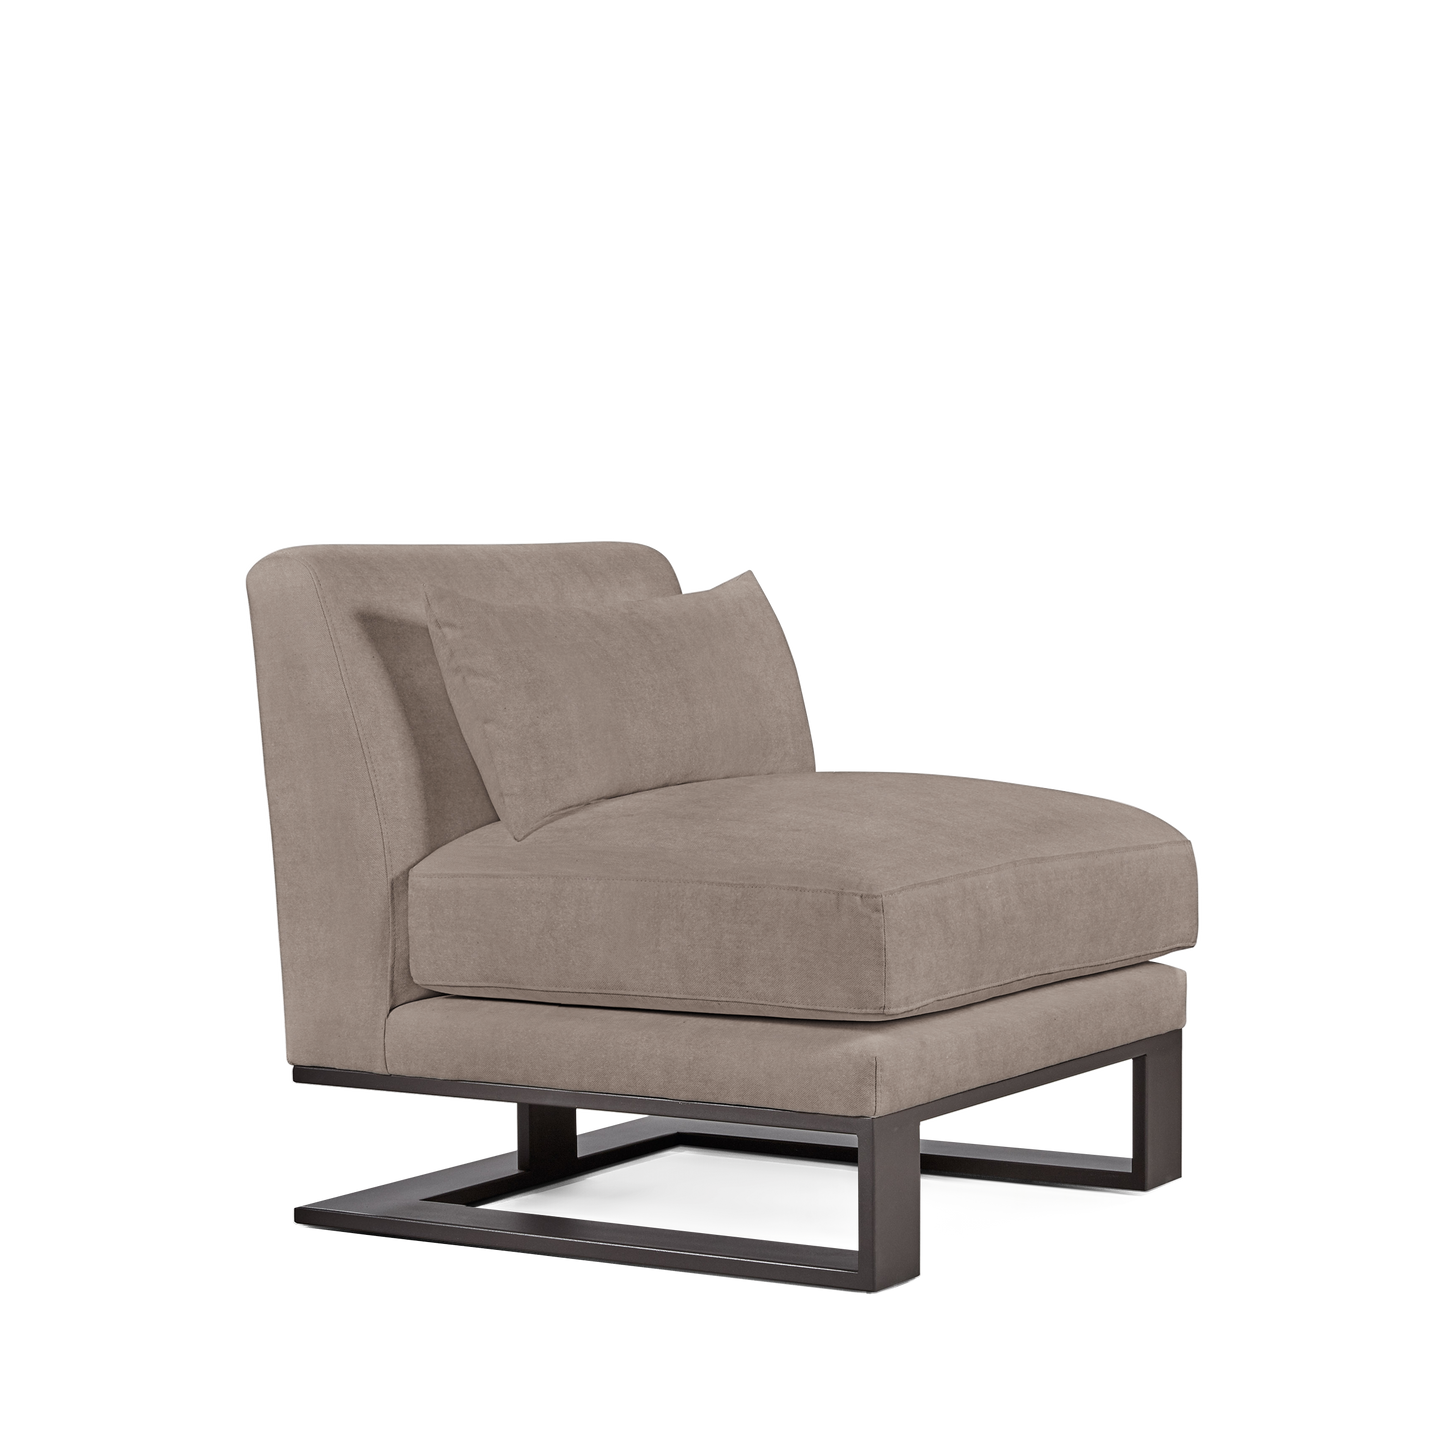 Alpes armchair with London grey textile and moka wood legs 